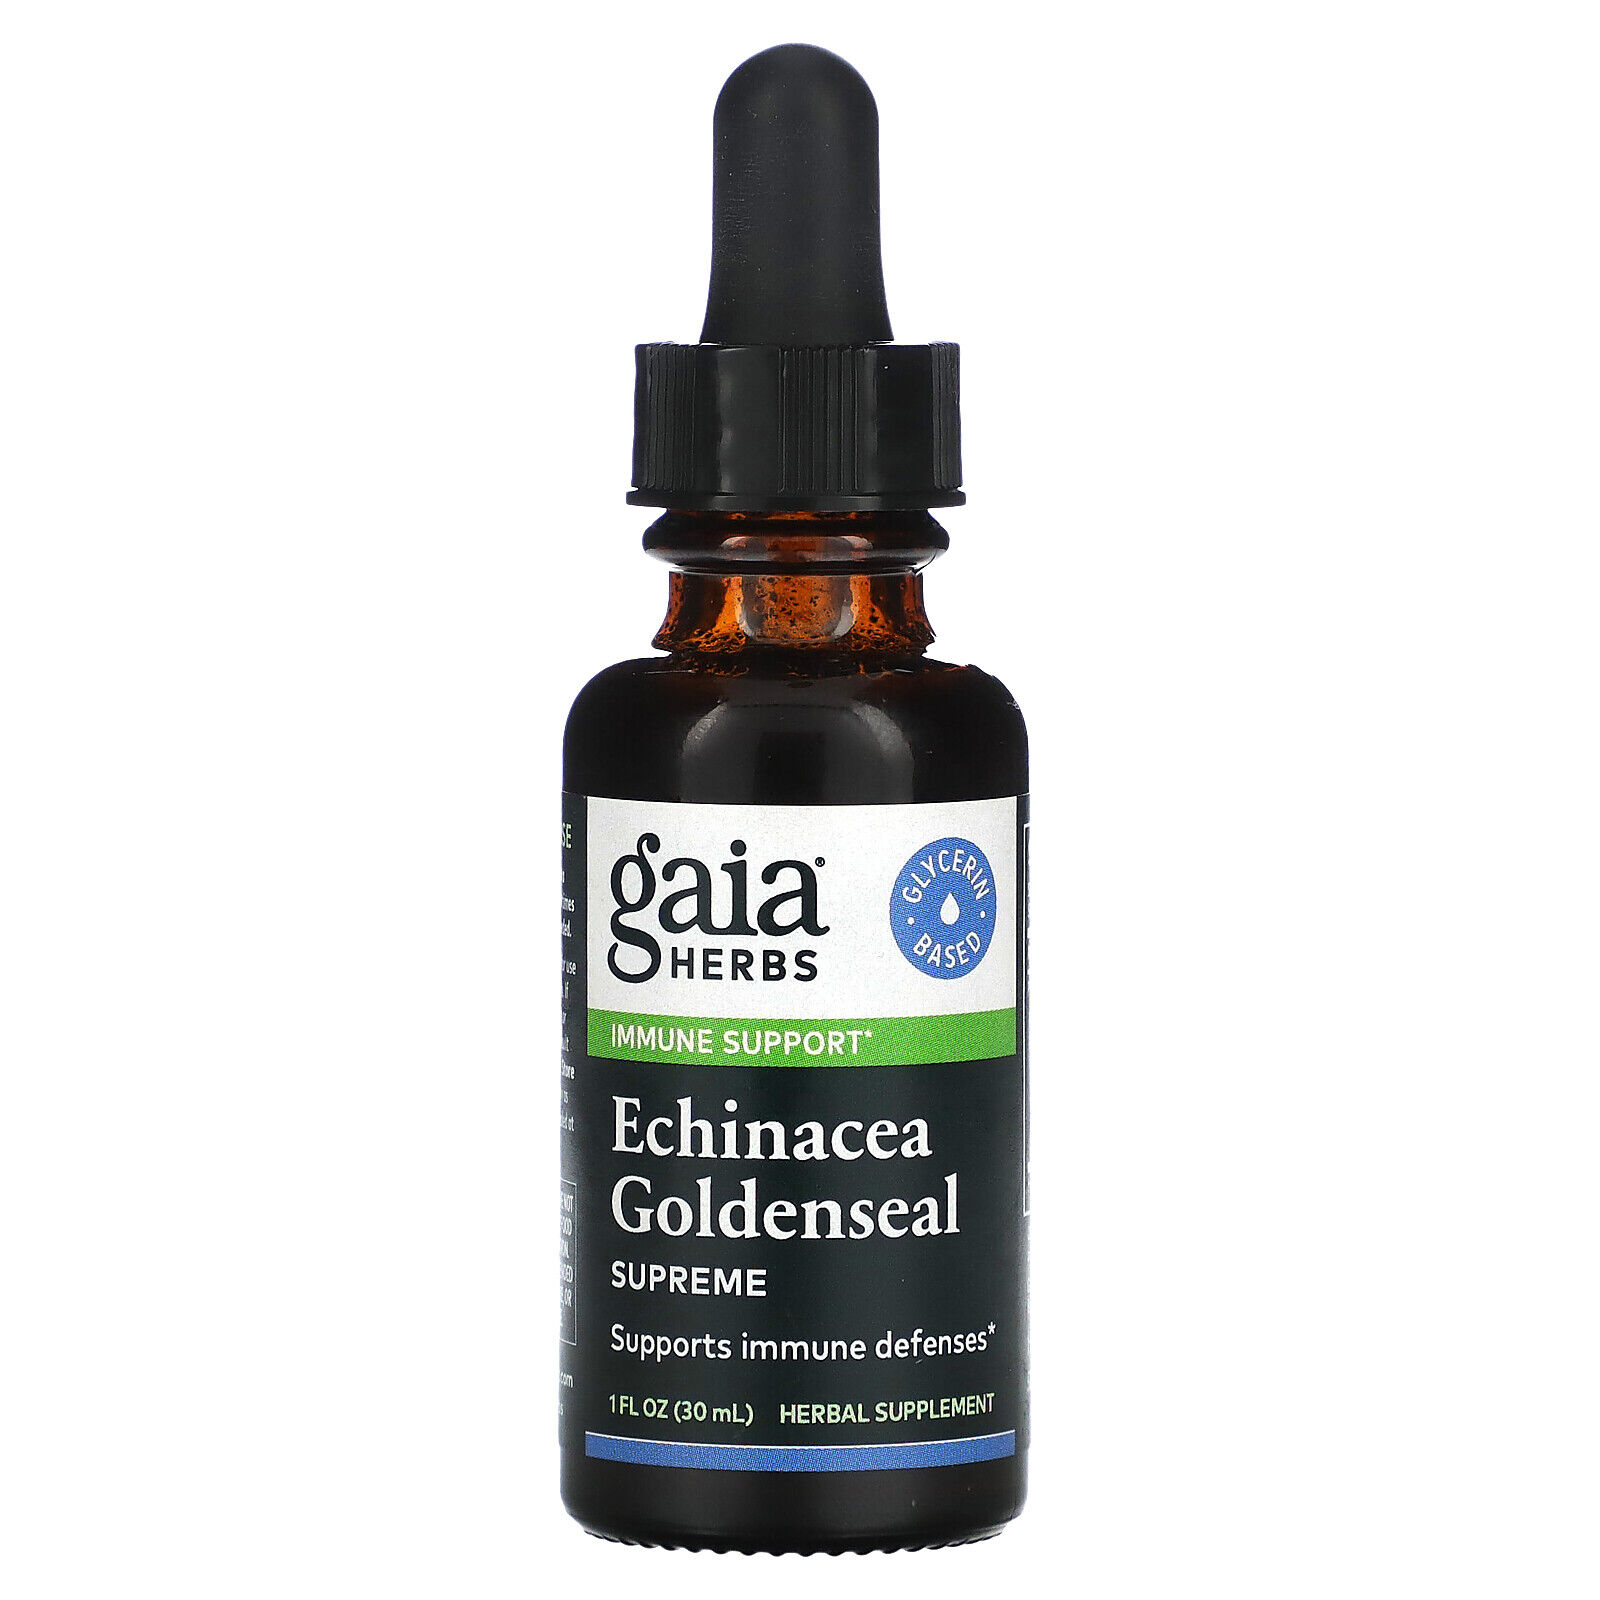 Echinacea Goldenseal Supreme, 1 fl oz (30 ml)